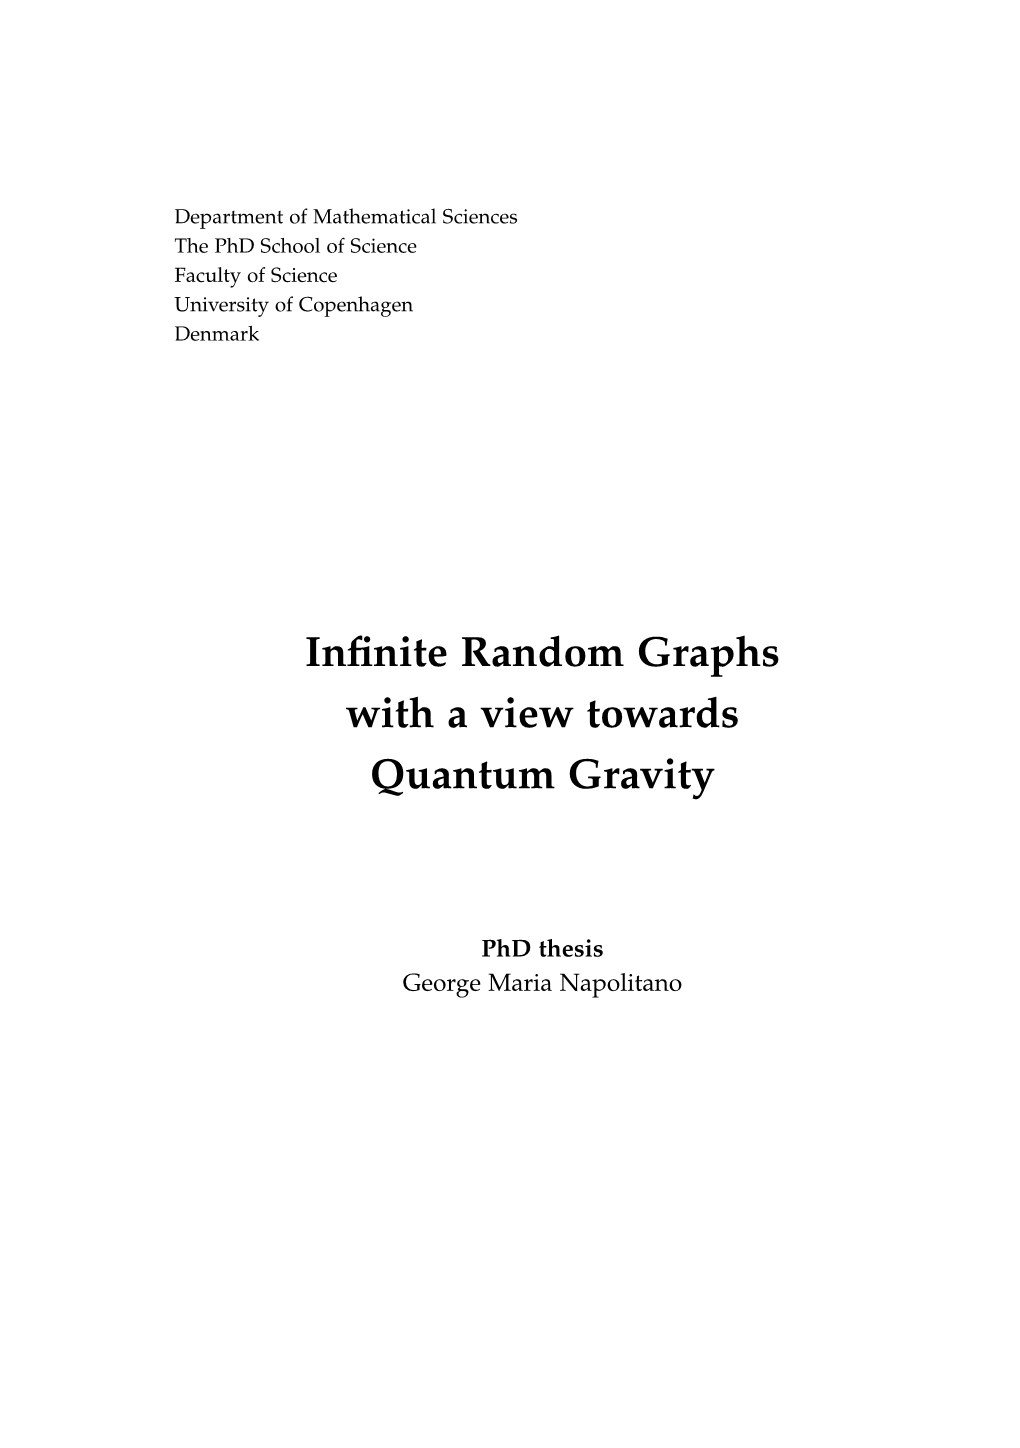 Infinite Random Graphs with a View Towards Quantum Gravity